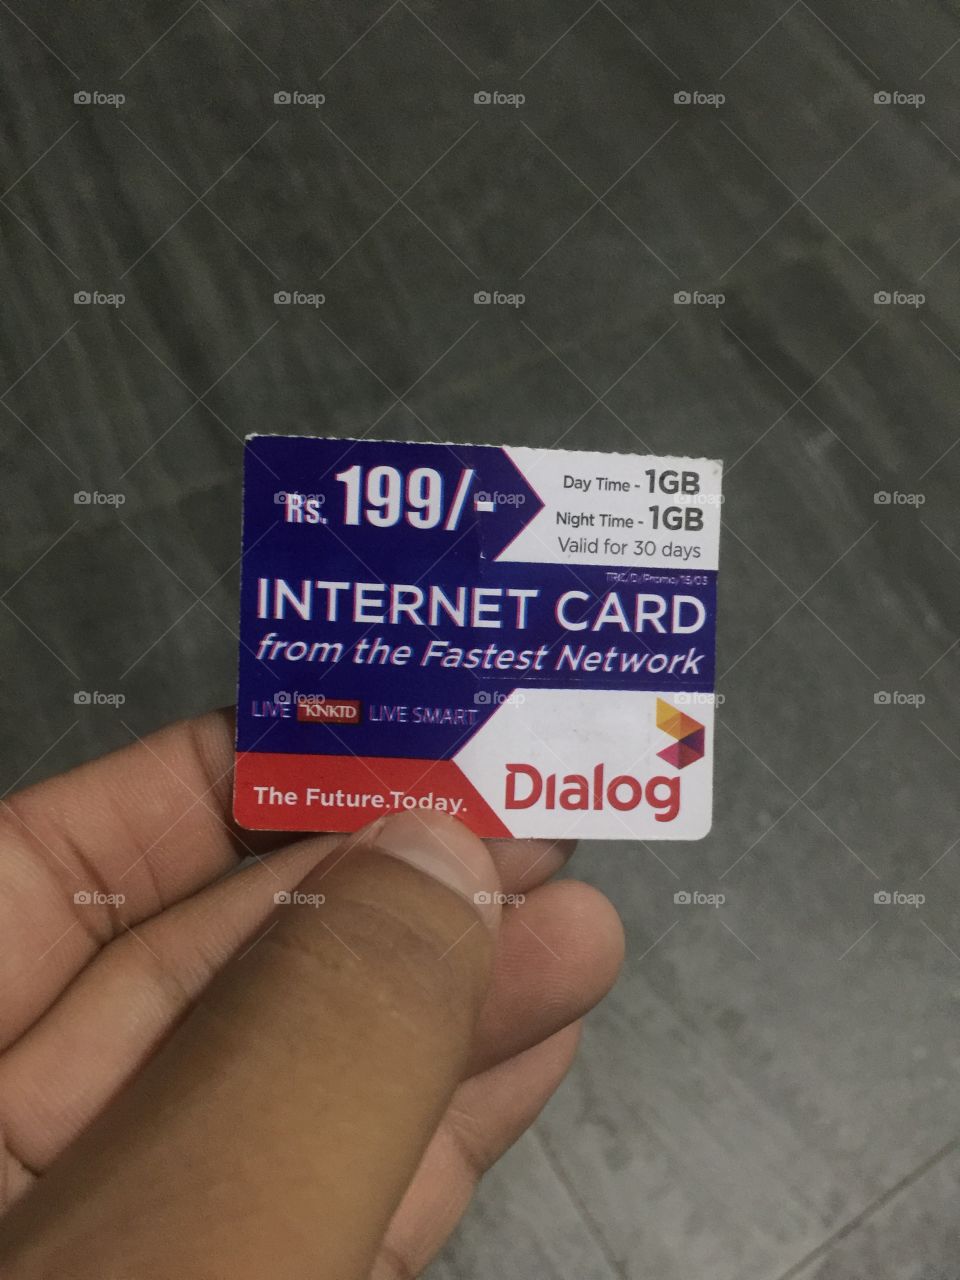 Internet card